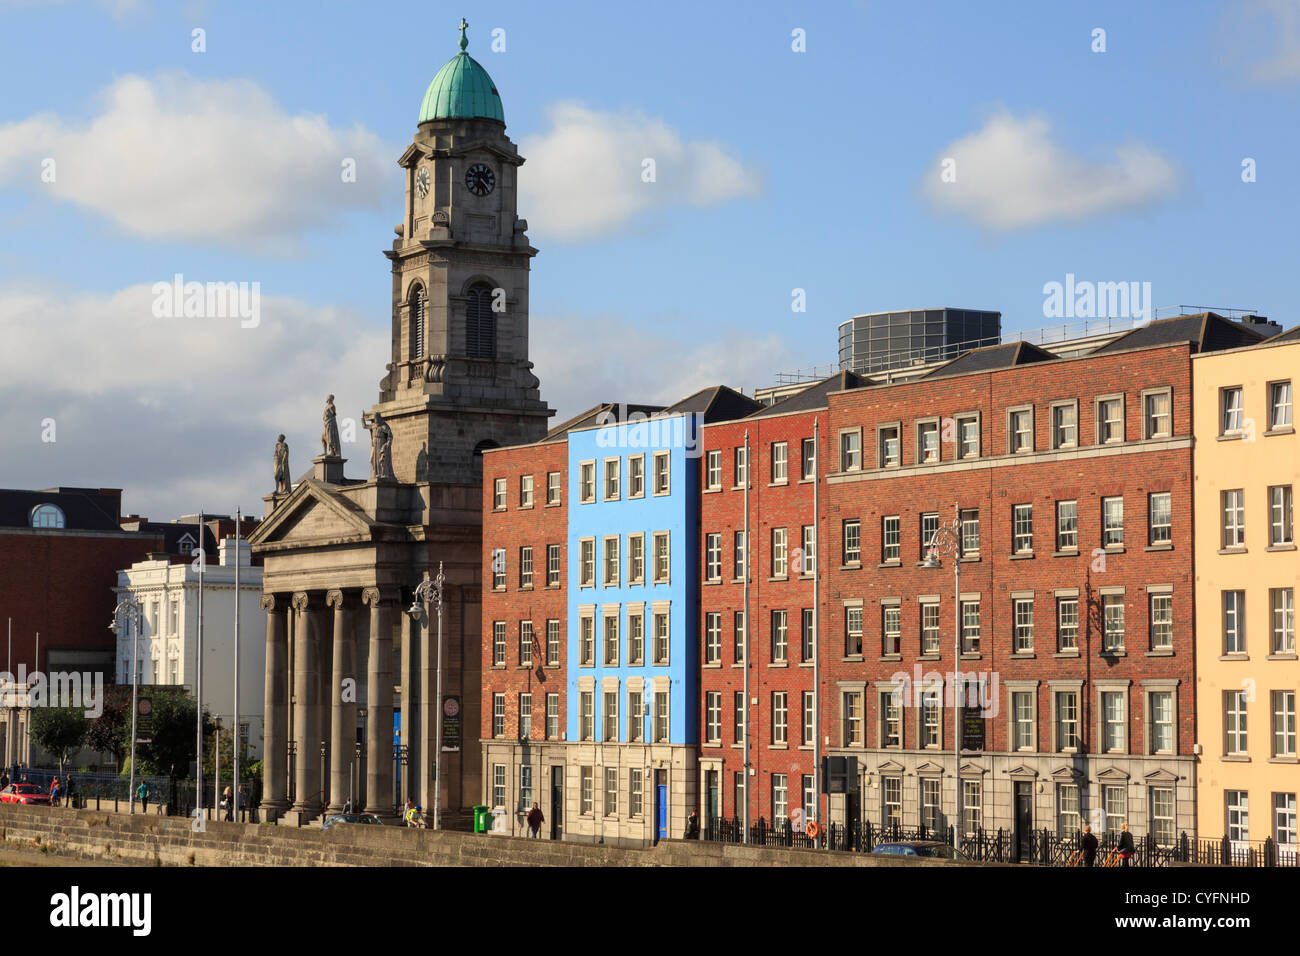 Str. Pauls Kirche erbaut 1837 und am Flussufer Bauten auf Arran Quay, Dublin, Republik Irland, Eire Stockfoto